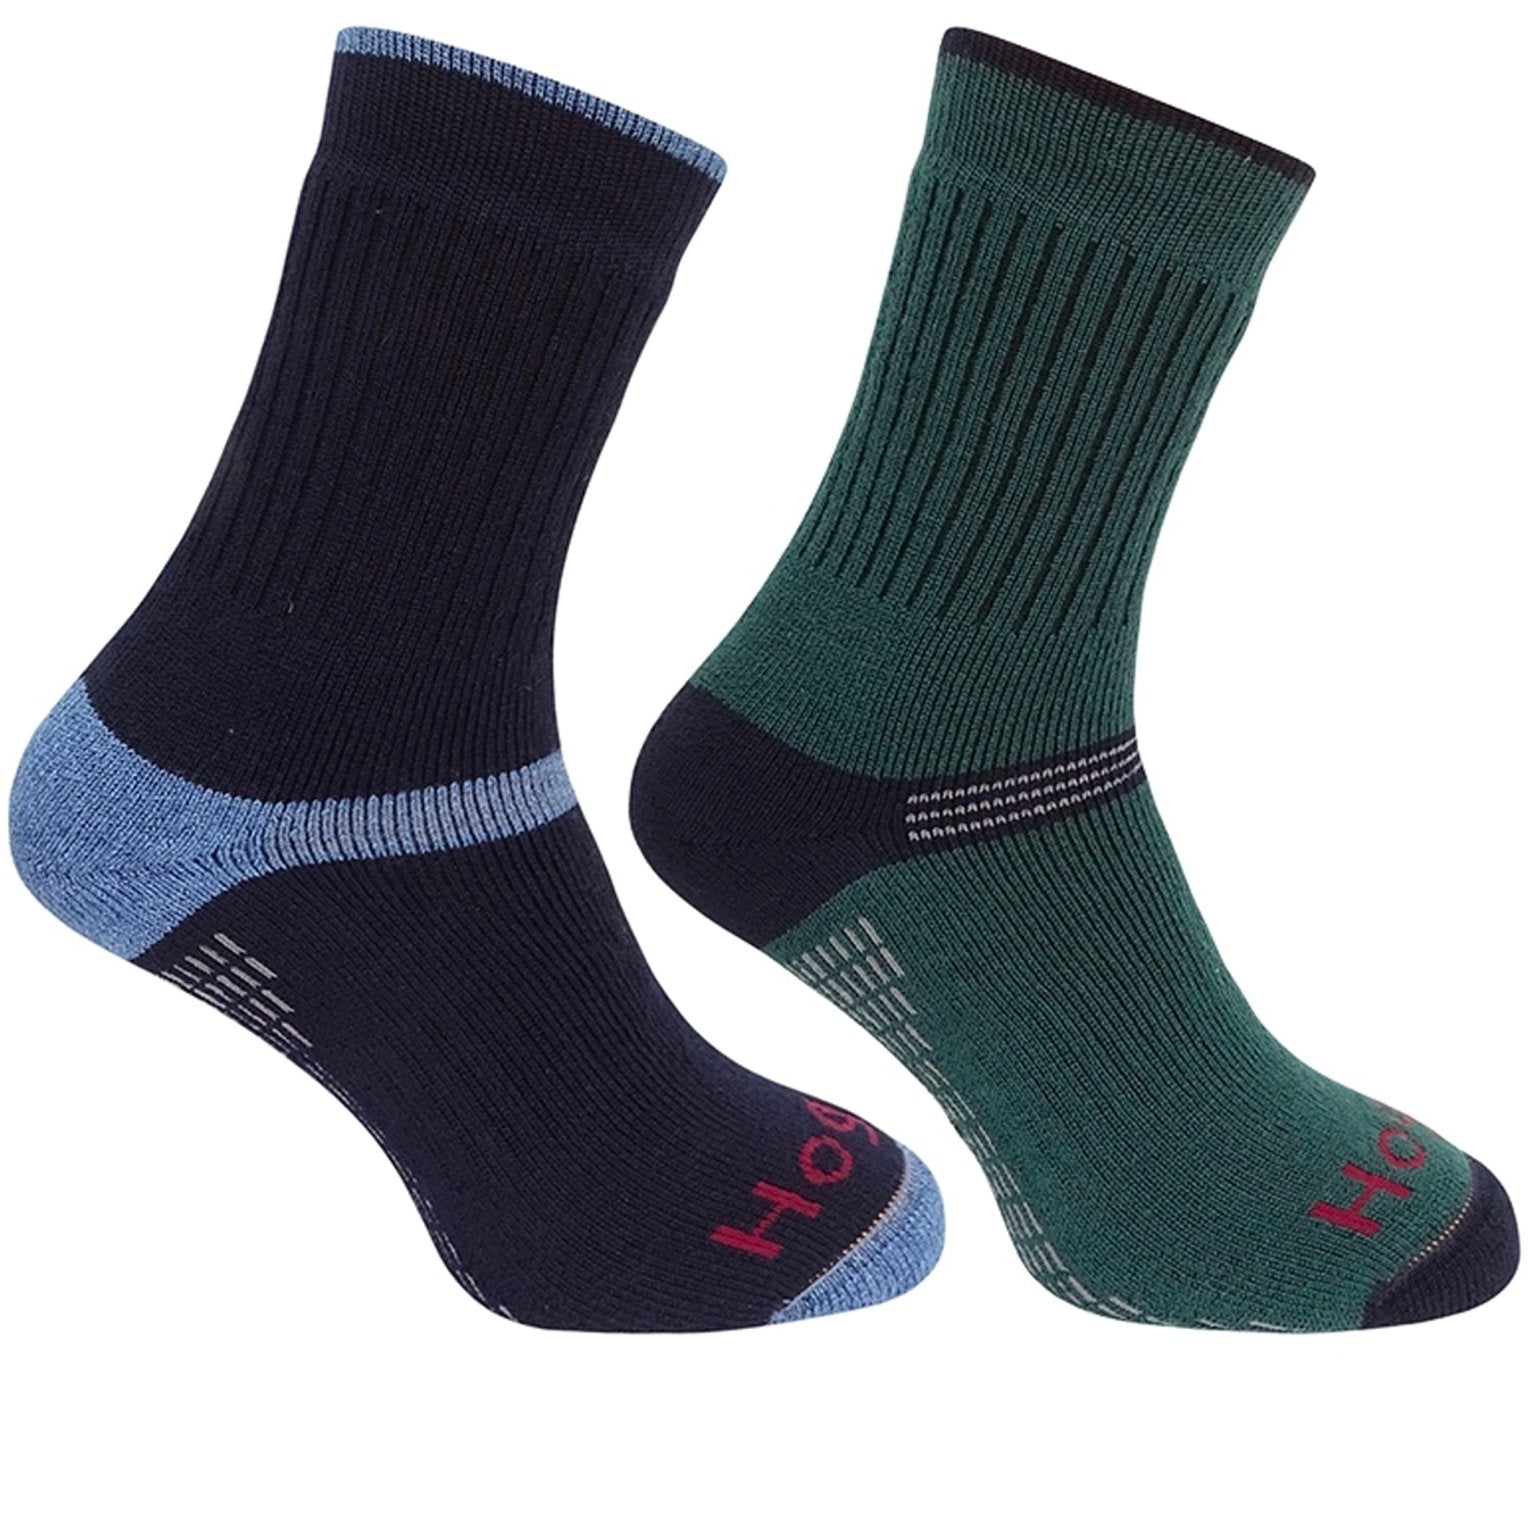 Hoggs of Fife Hoggs of Fife - 1905 Mens Socks in Charcoal/Denim (Twin Pack) - Tech Active Socks